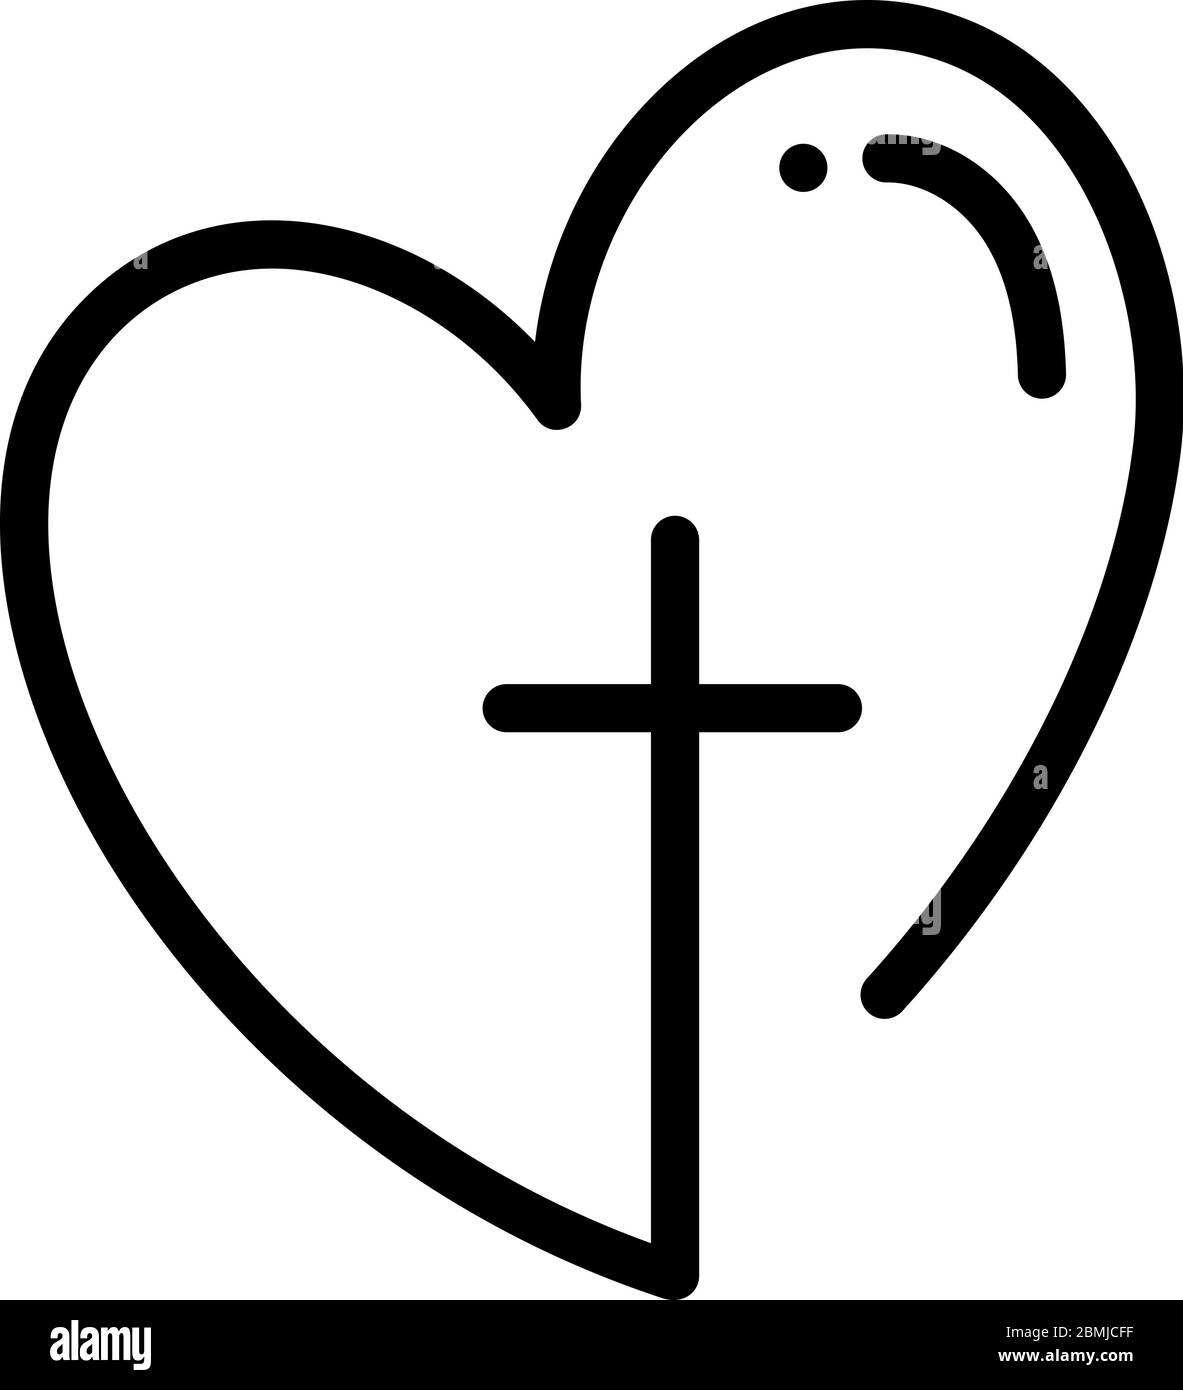 Abstract religious cross and heart icon. Christian love logo. Monoline vector illustration Stock Vector